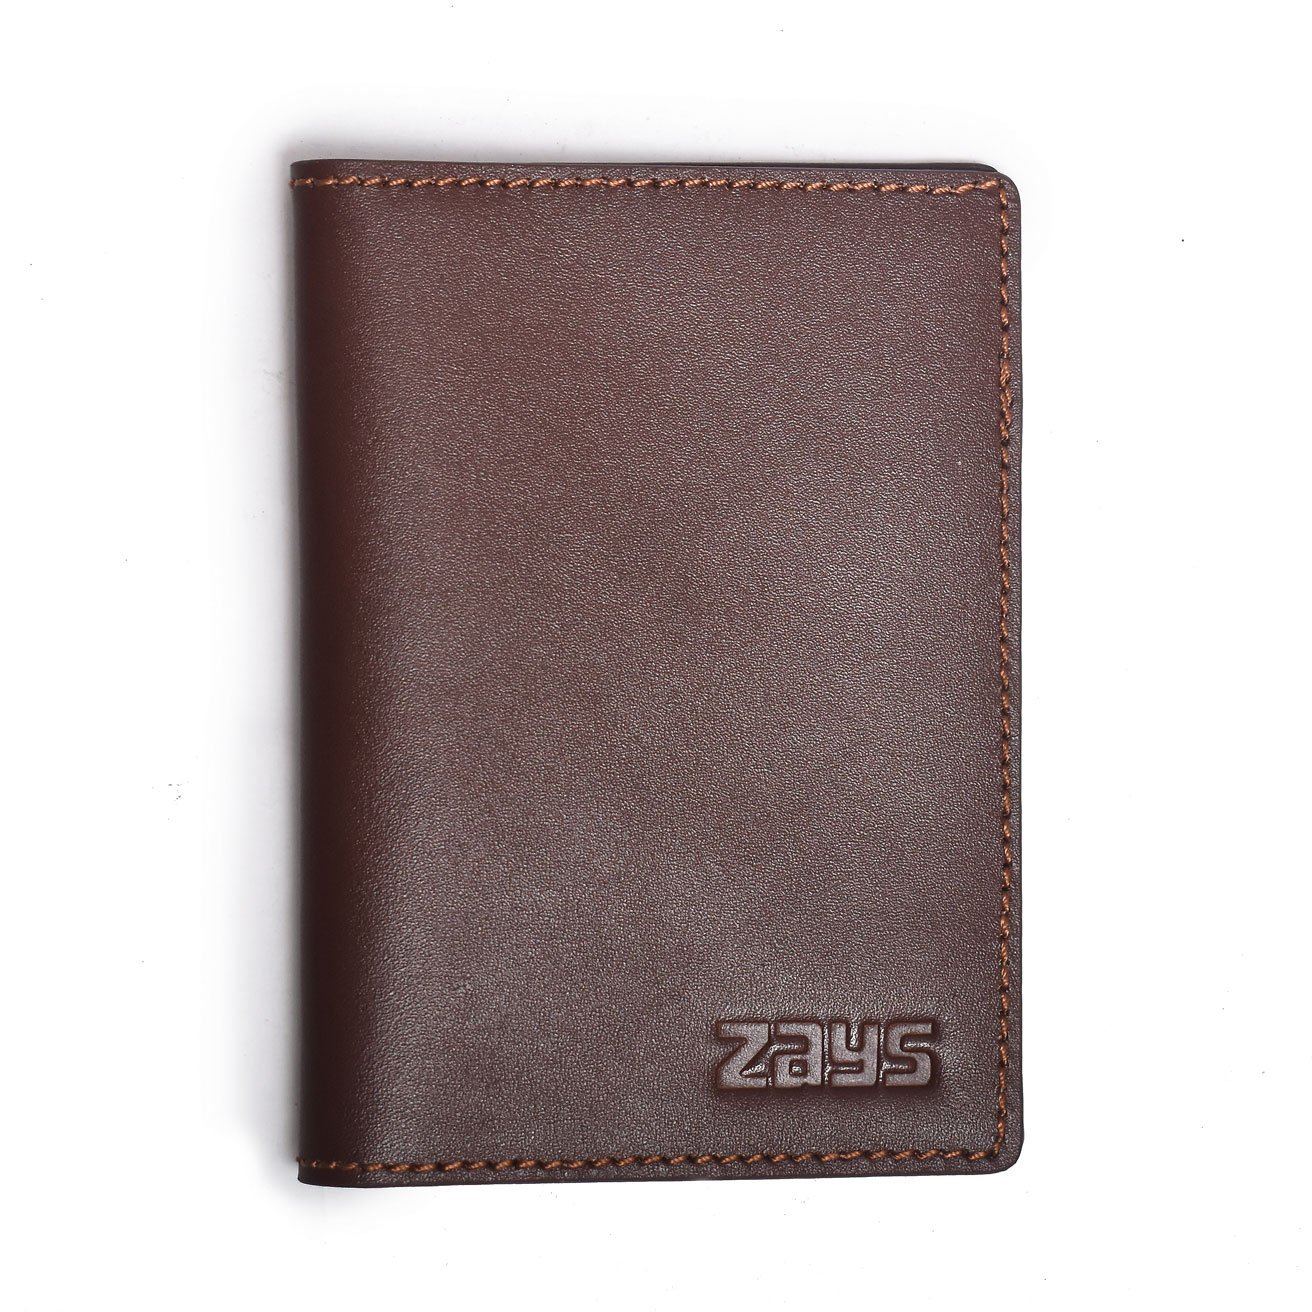 Leather Passport Cover Holder For Mrp Passport